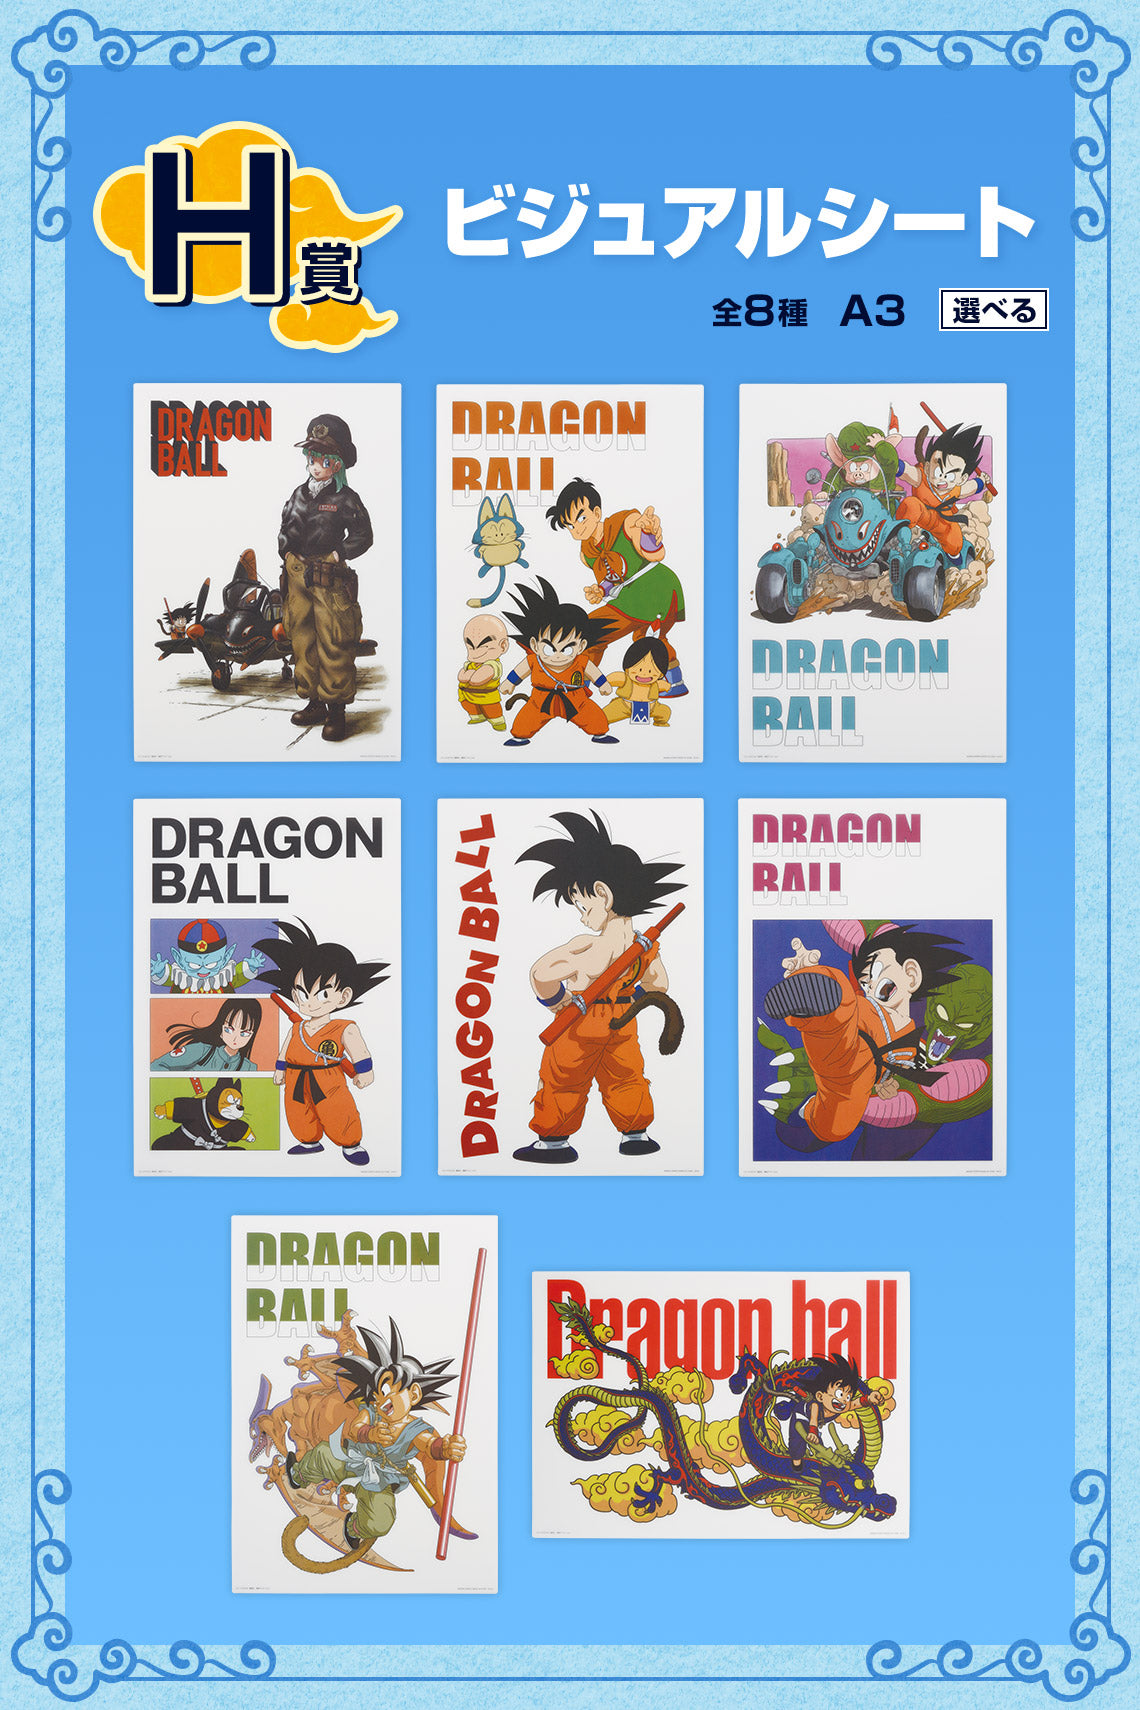 DRAGON BALL ICHIBAN KUJI - Dragon Ball EX Temple Above the Clouds - H PRIZE - Visual Sheet complete set 8 Pcs